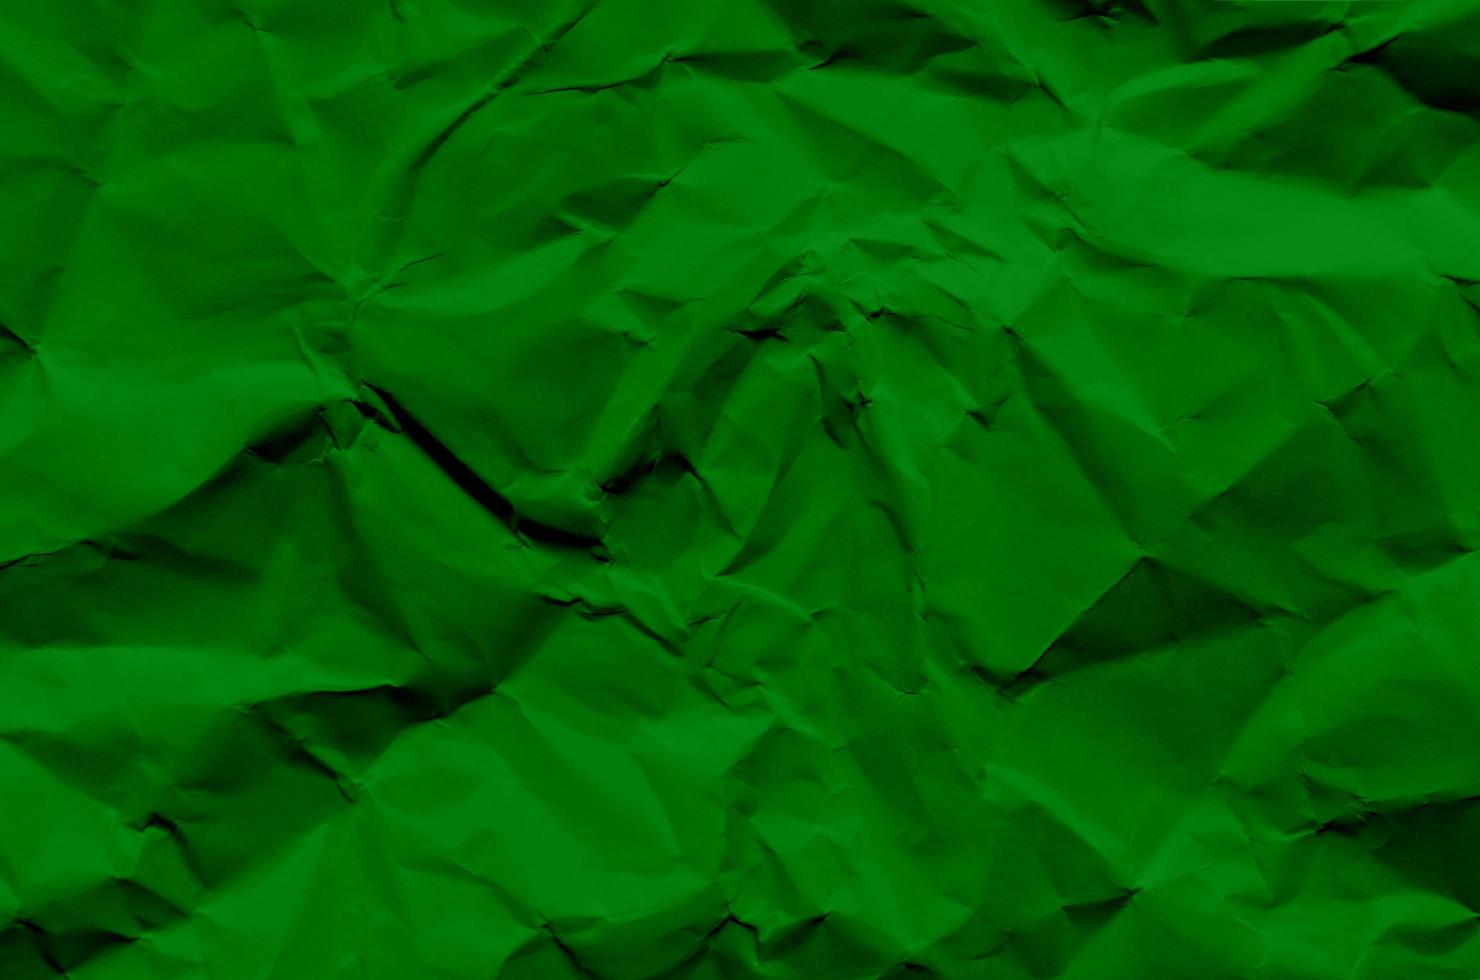 grön bakgrund och tapeter av skrynklig pappersstruktur. foto